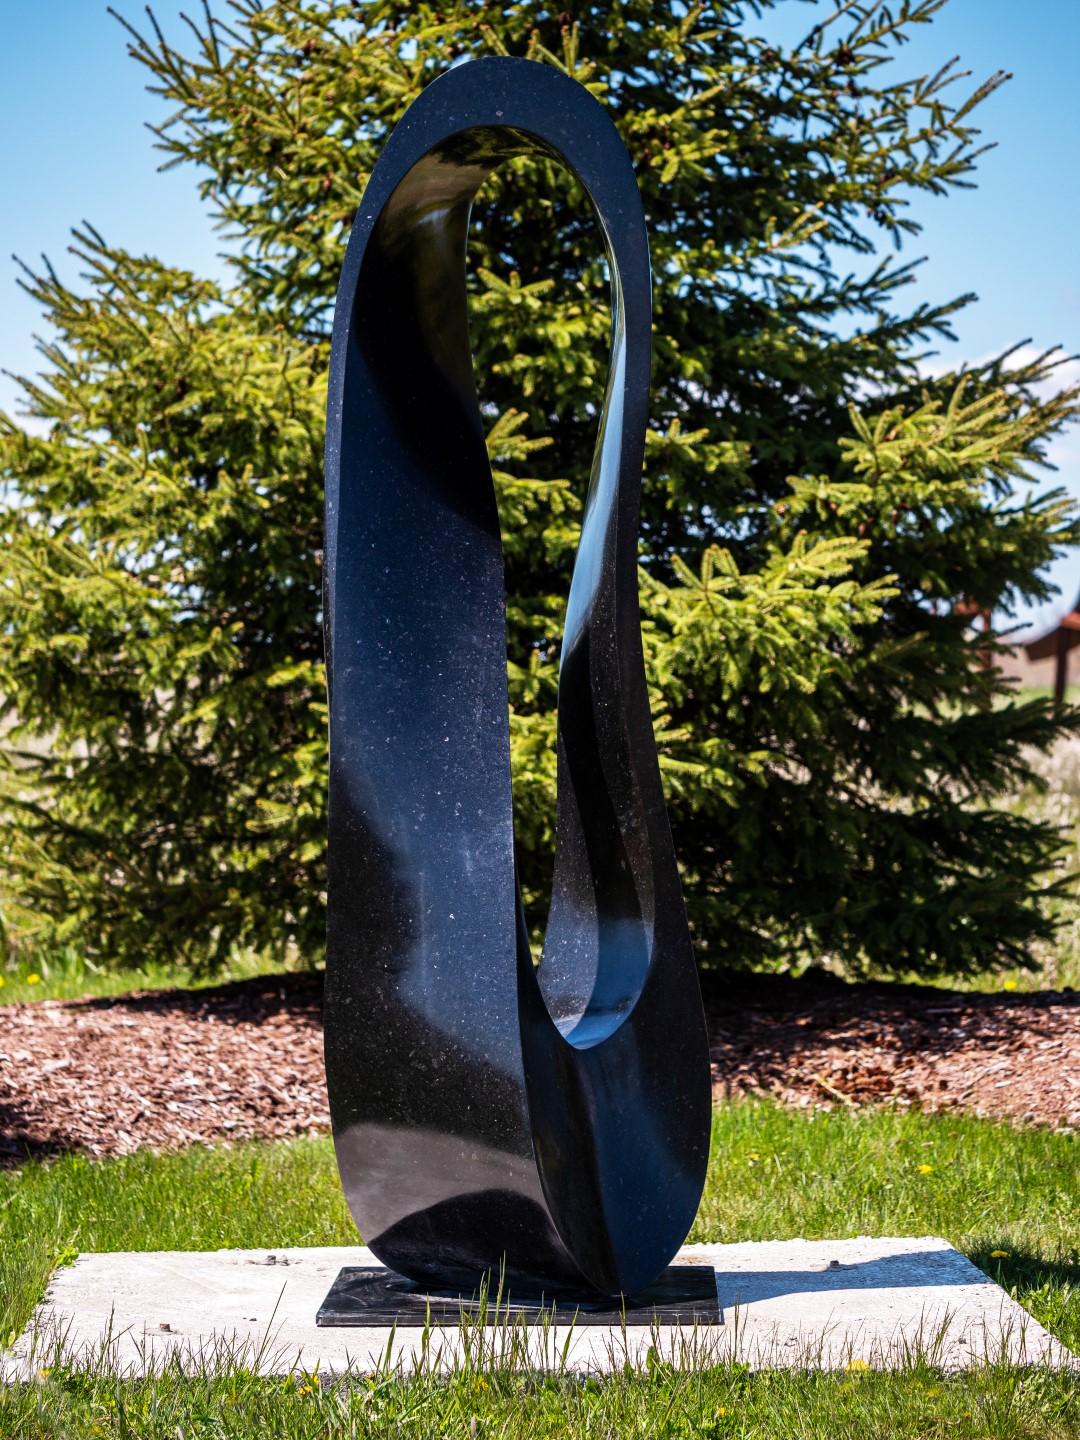 abstract garden sculpture